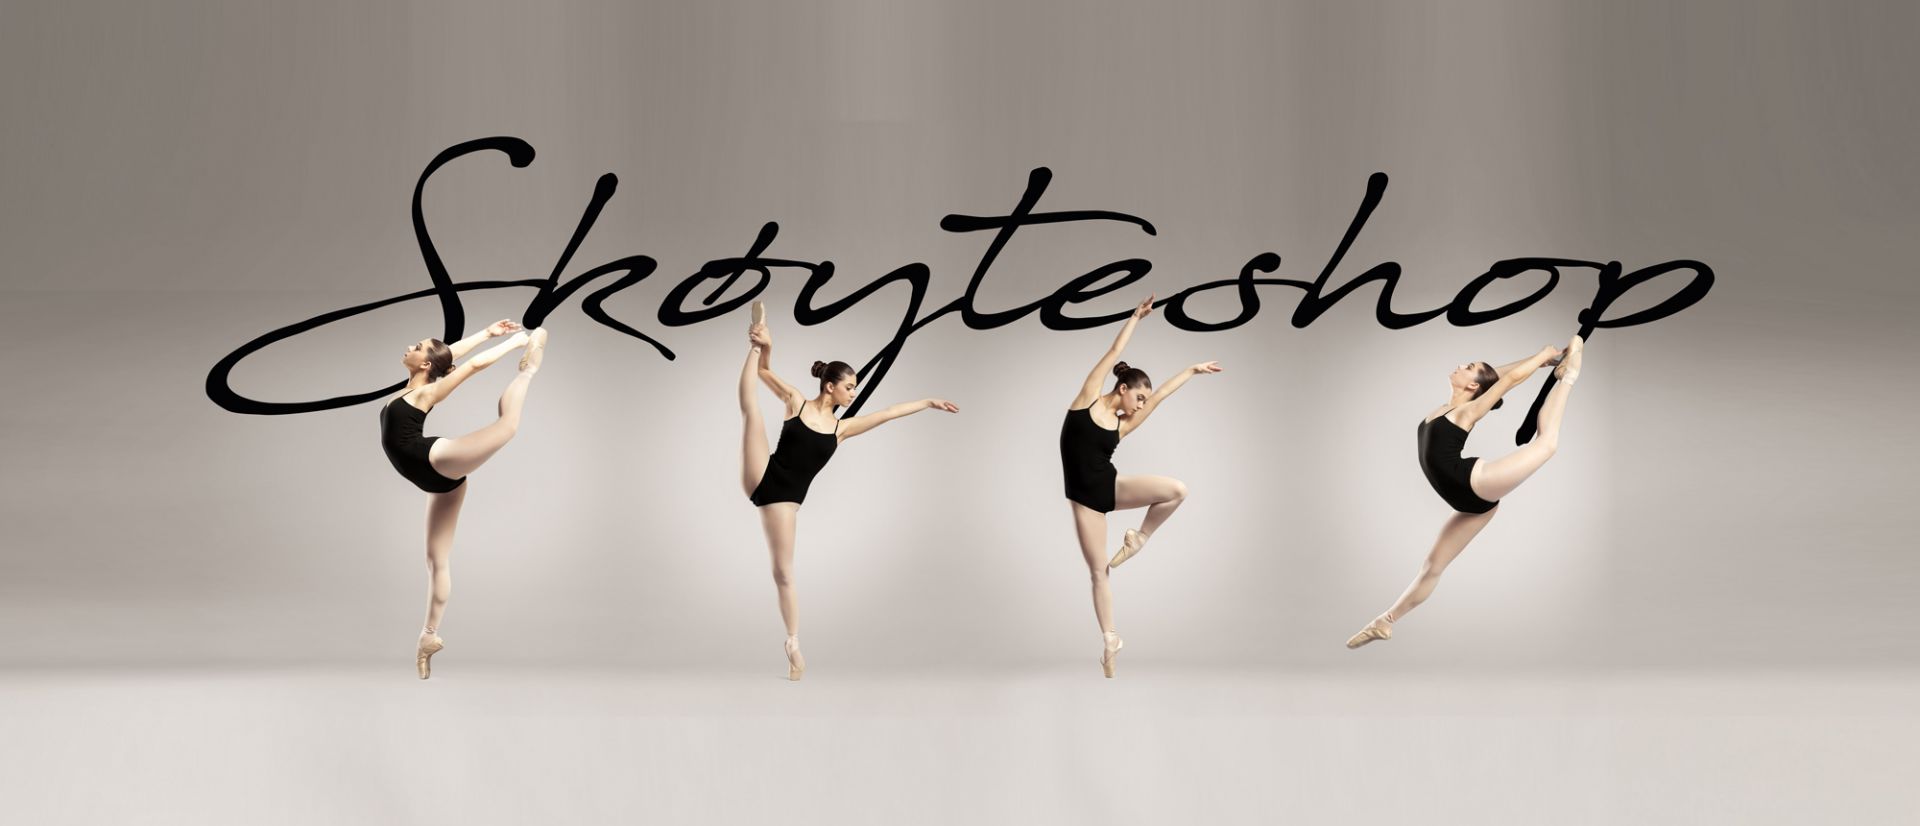 Skoyteshop_logo_ballerina